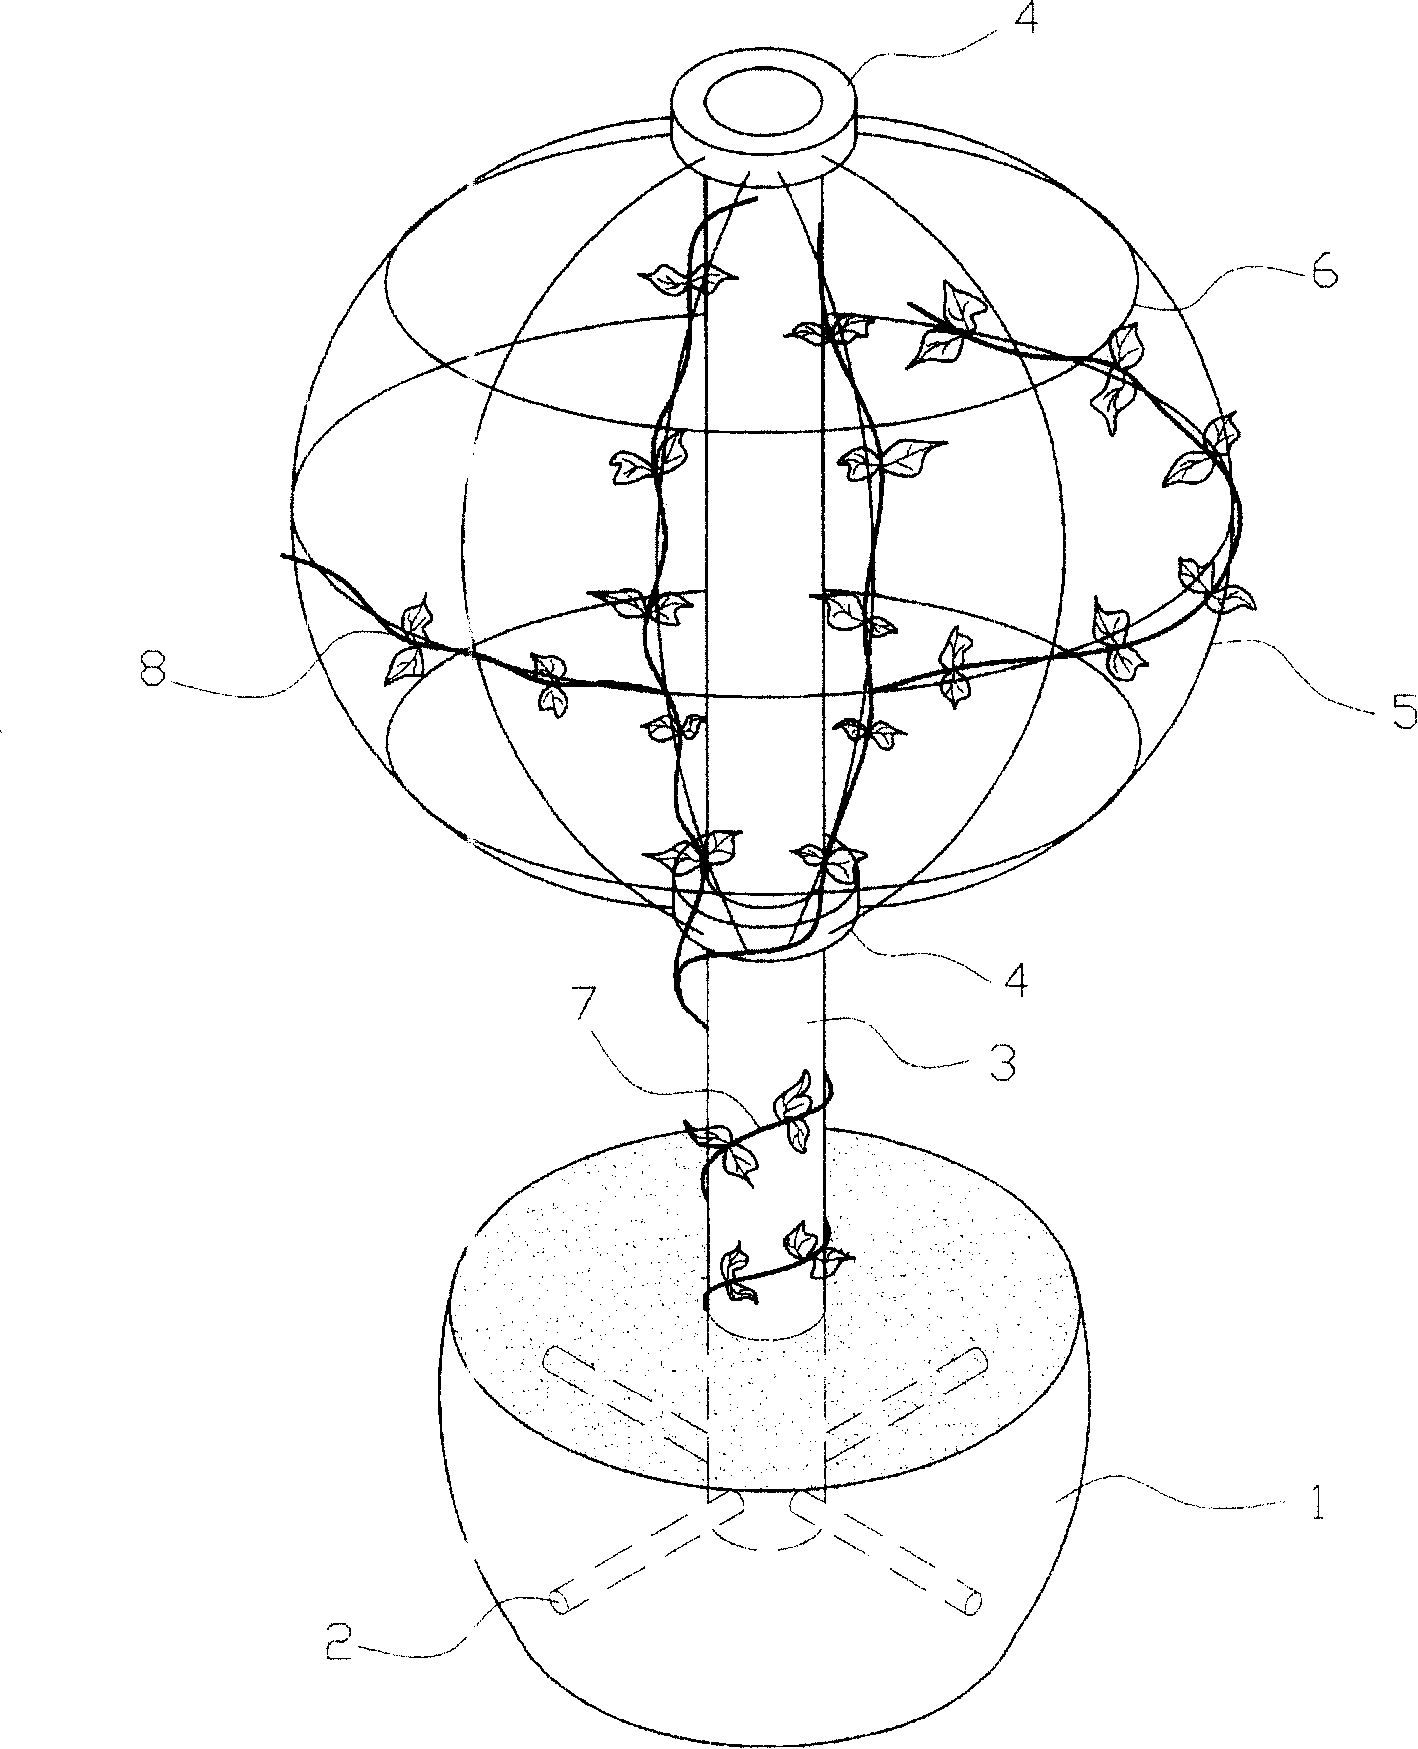 Method for cultivating spherical potted landscape through modelling vine